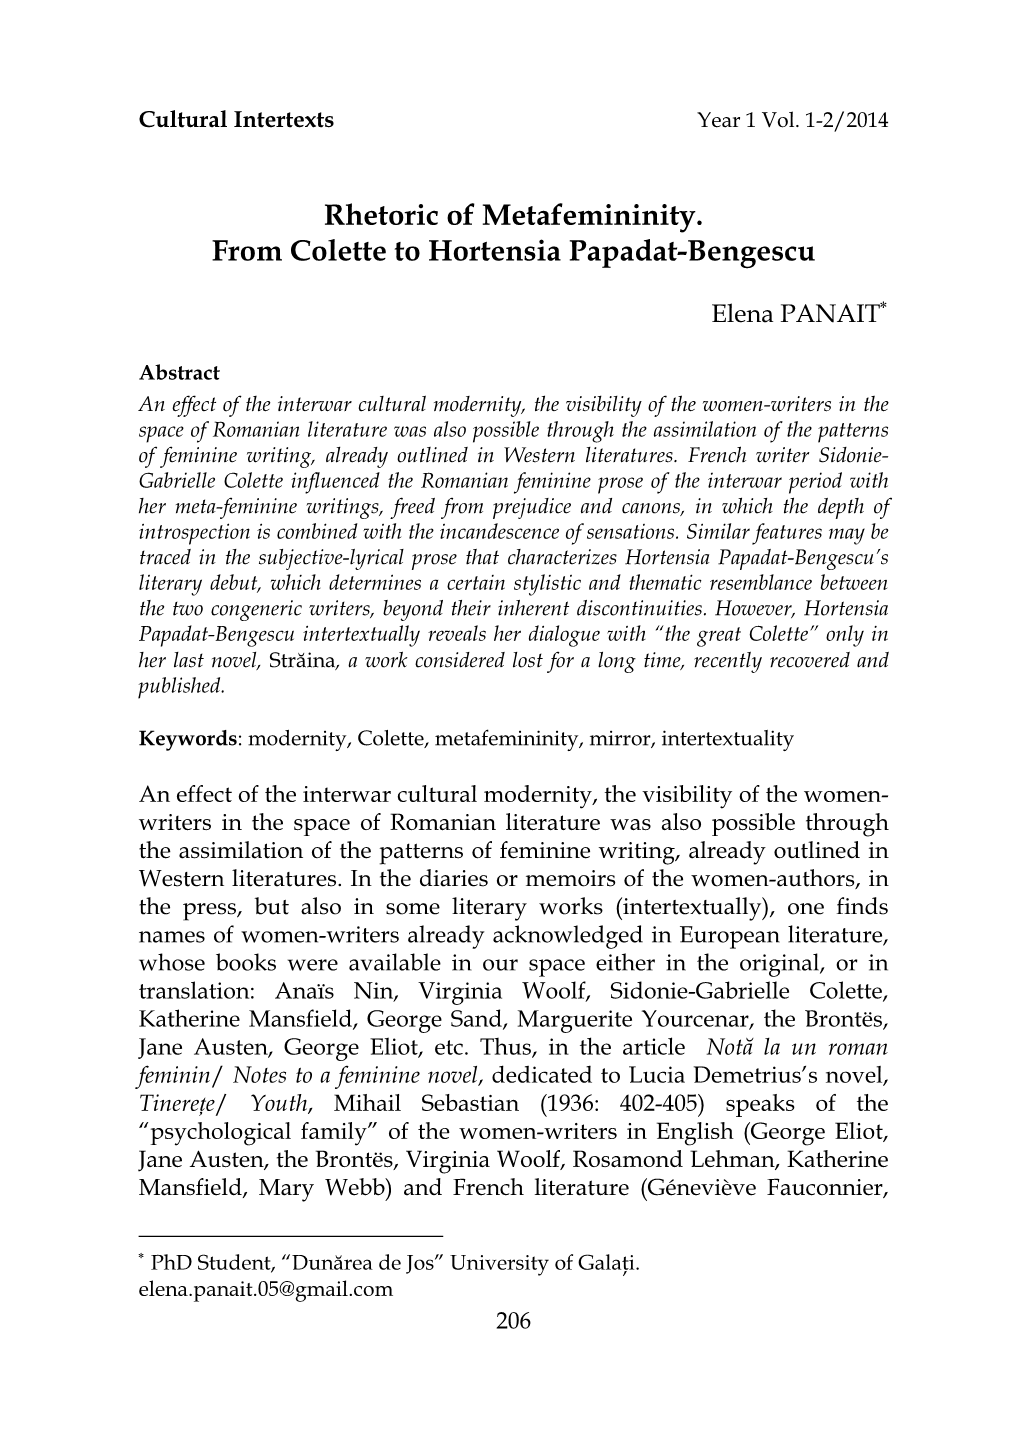 Rhetoric of Metafemininity. from Colette to Hortensia Papadat-Bengescu